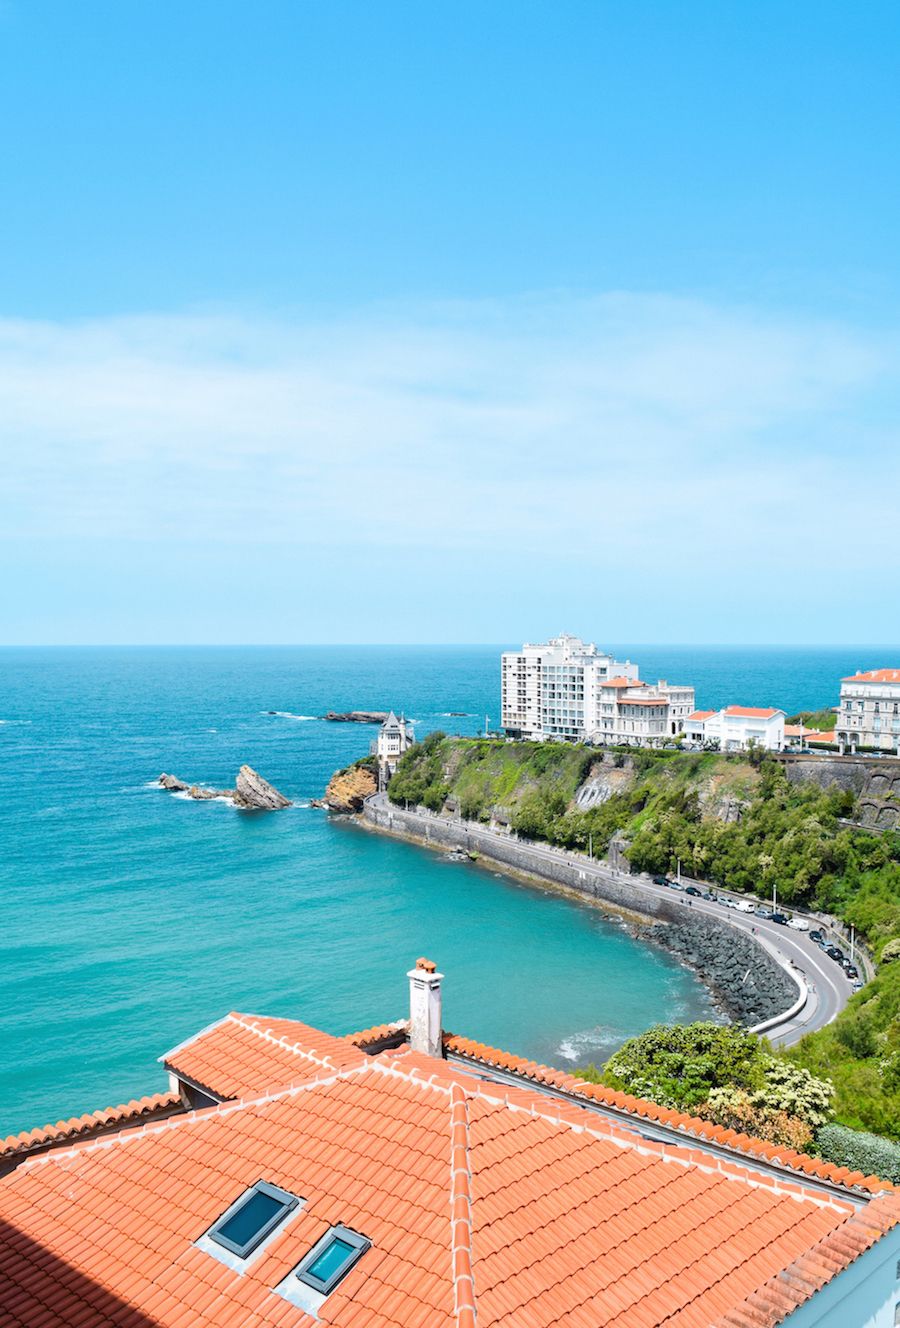 La Côte des Basques: a Stunning Biarritz Coastline